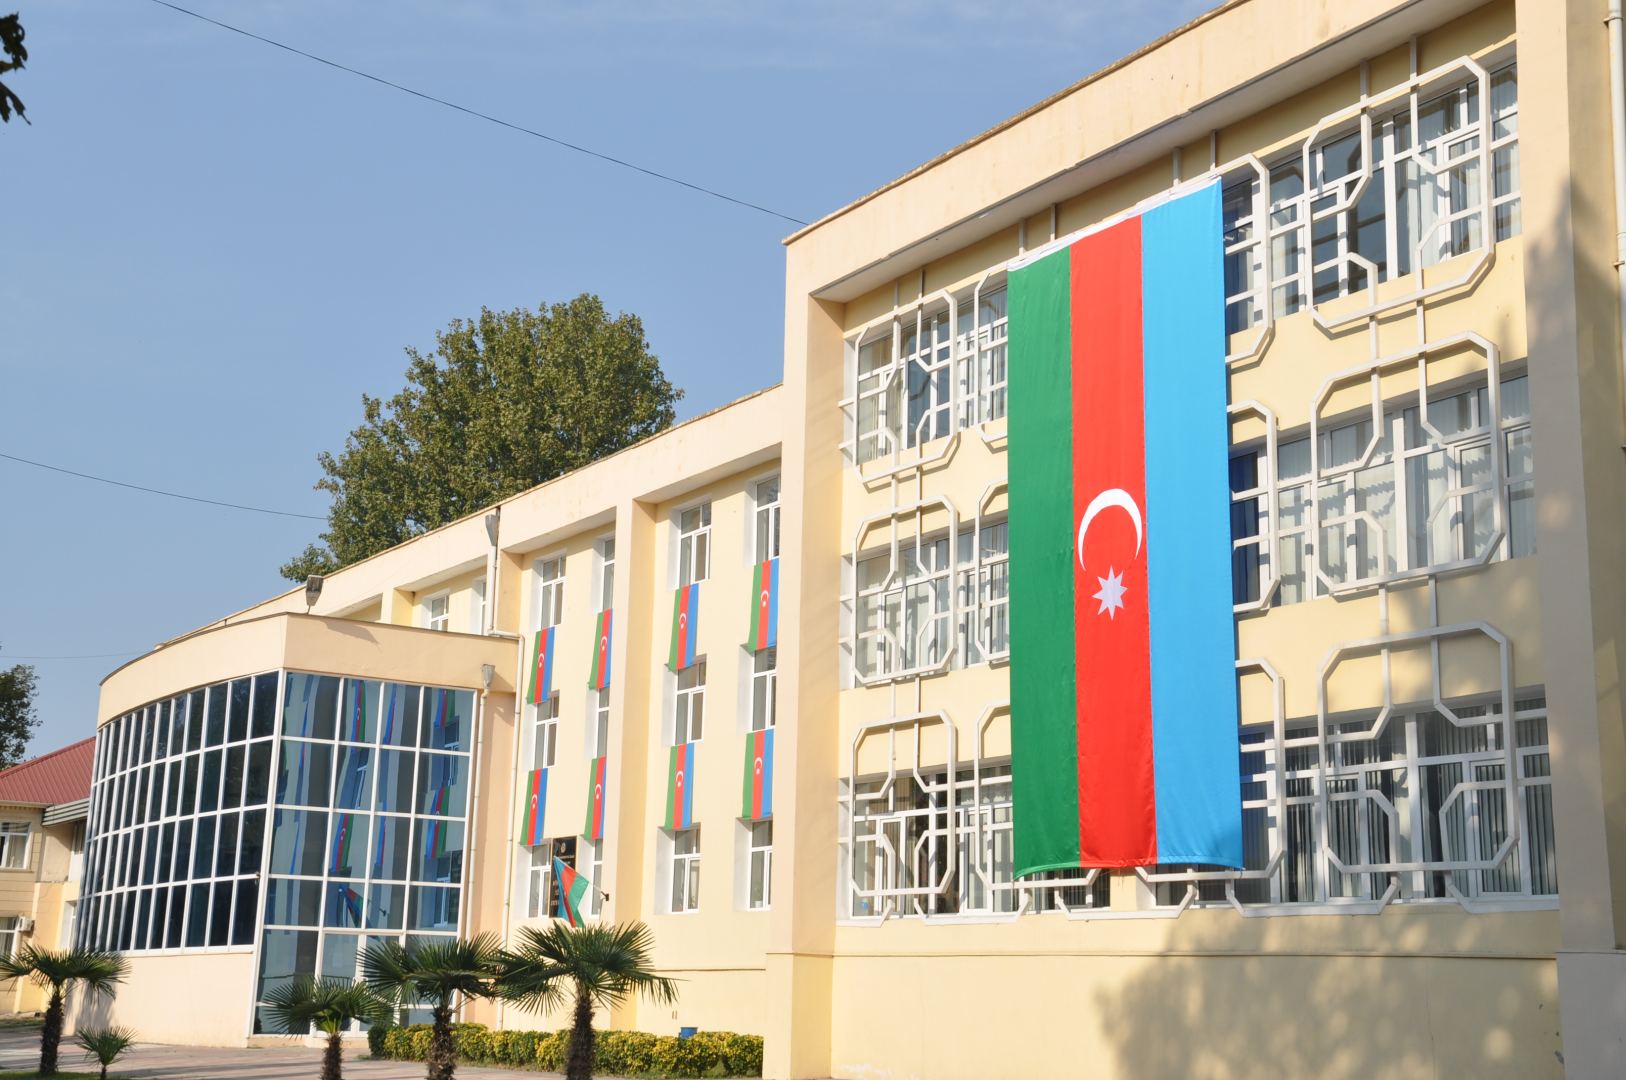 Azerbaijan's Mingachevir State University becomes winner of "Erasmus+" program